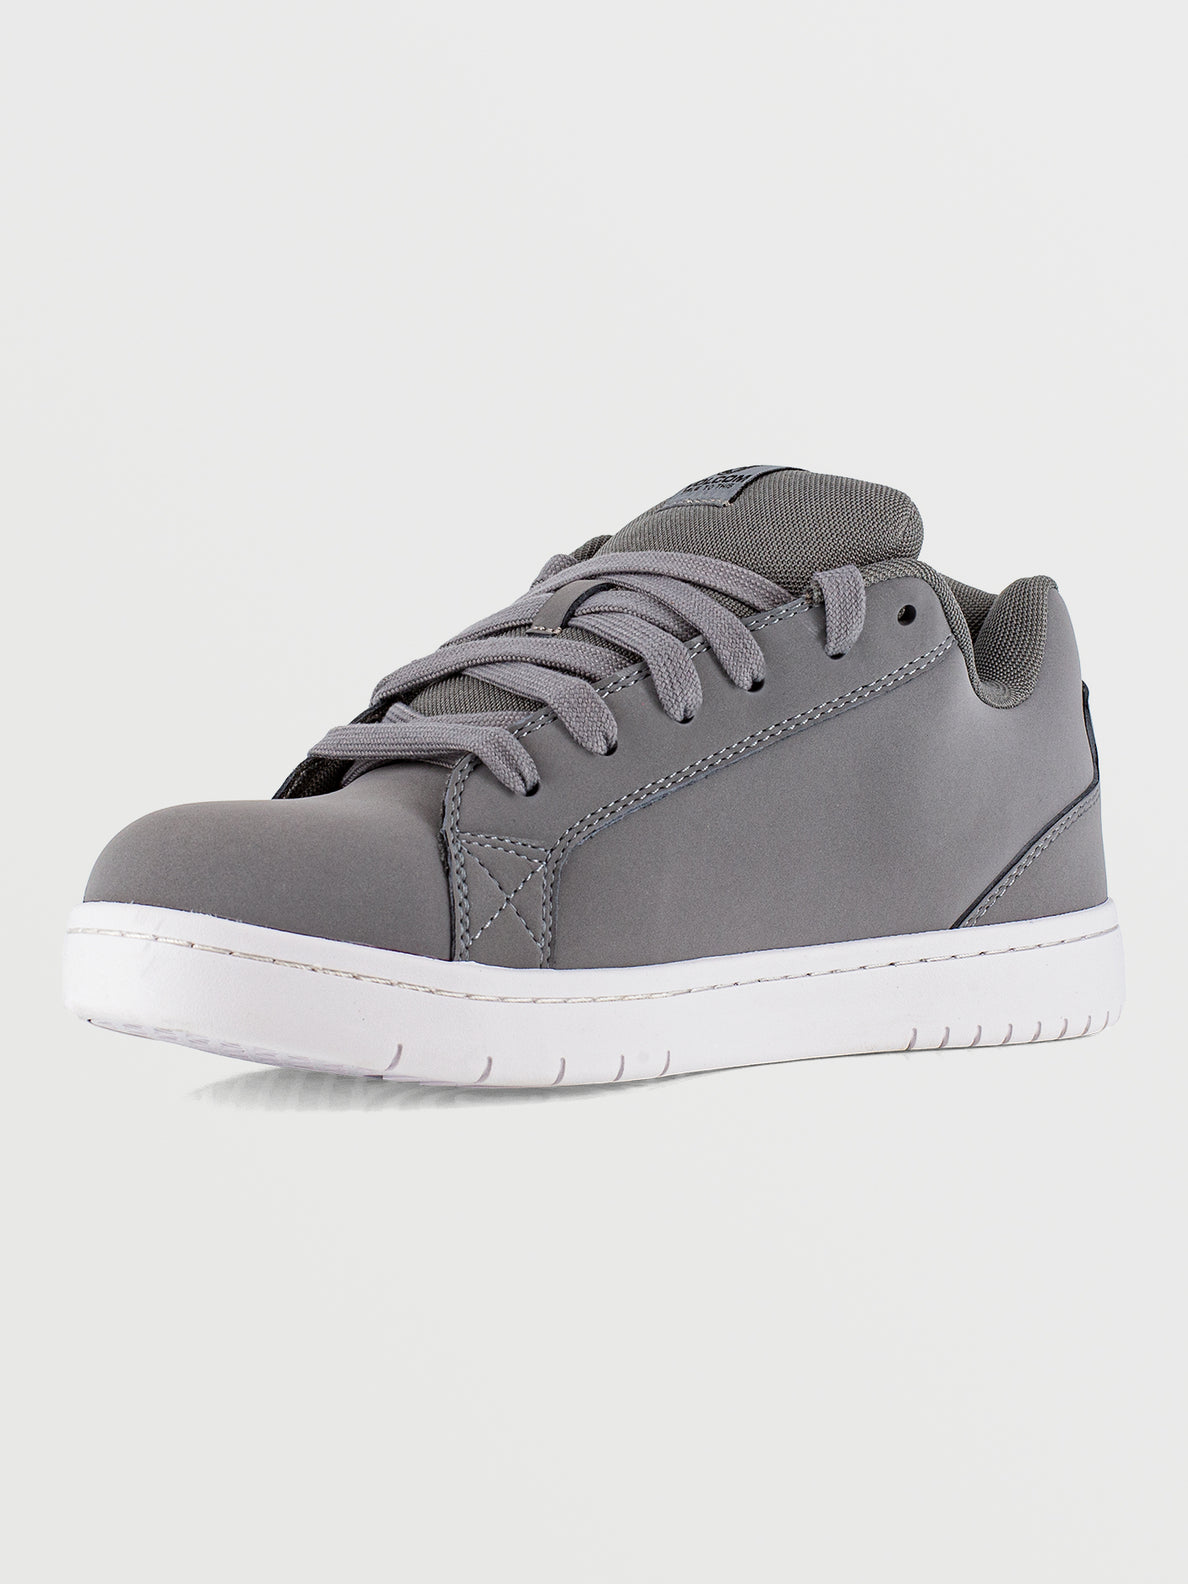 Volcom Workwear Stone Shoes - Grey